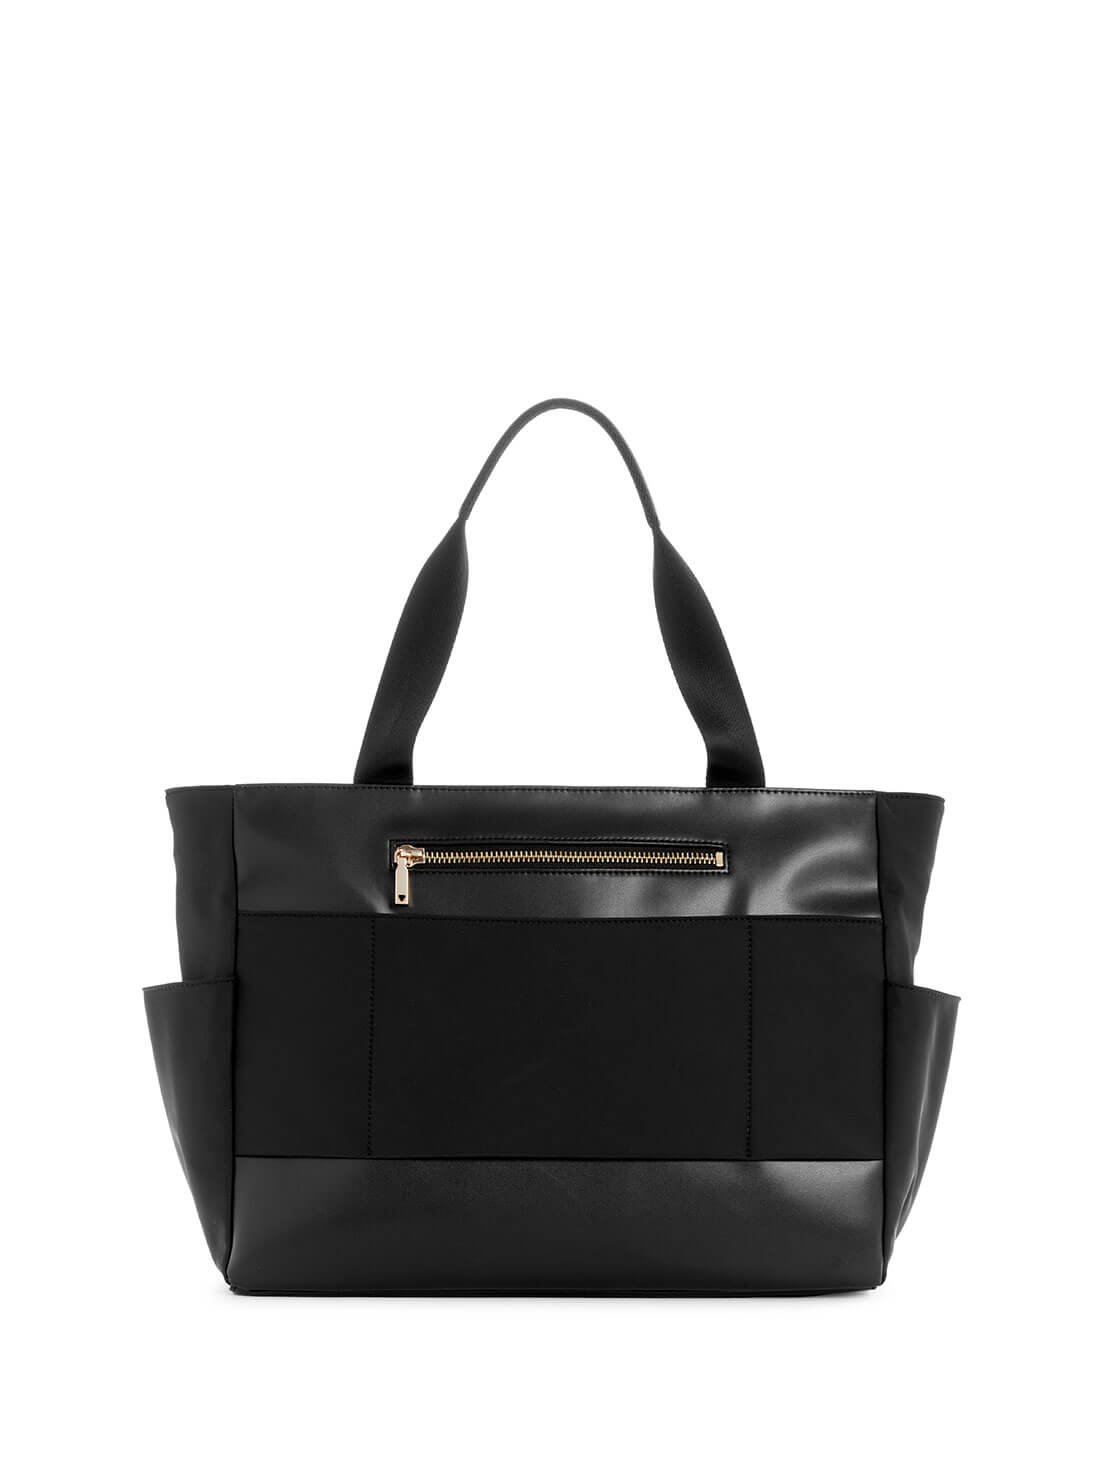 Eco Black Gemma Travel Tote Bag | GUESS Women's Handbags | back view